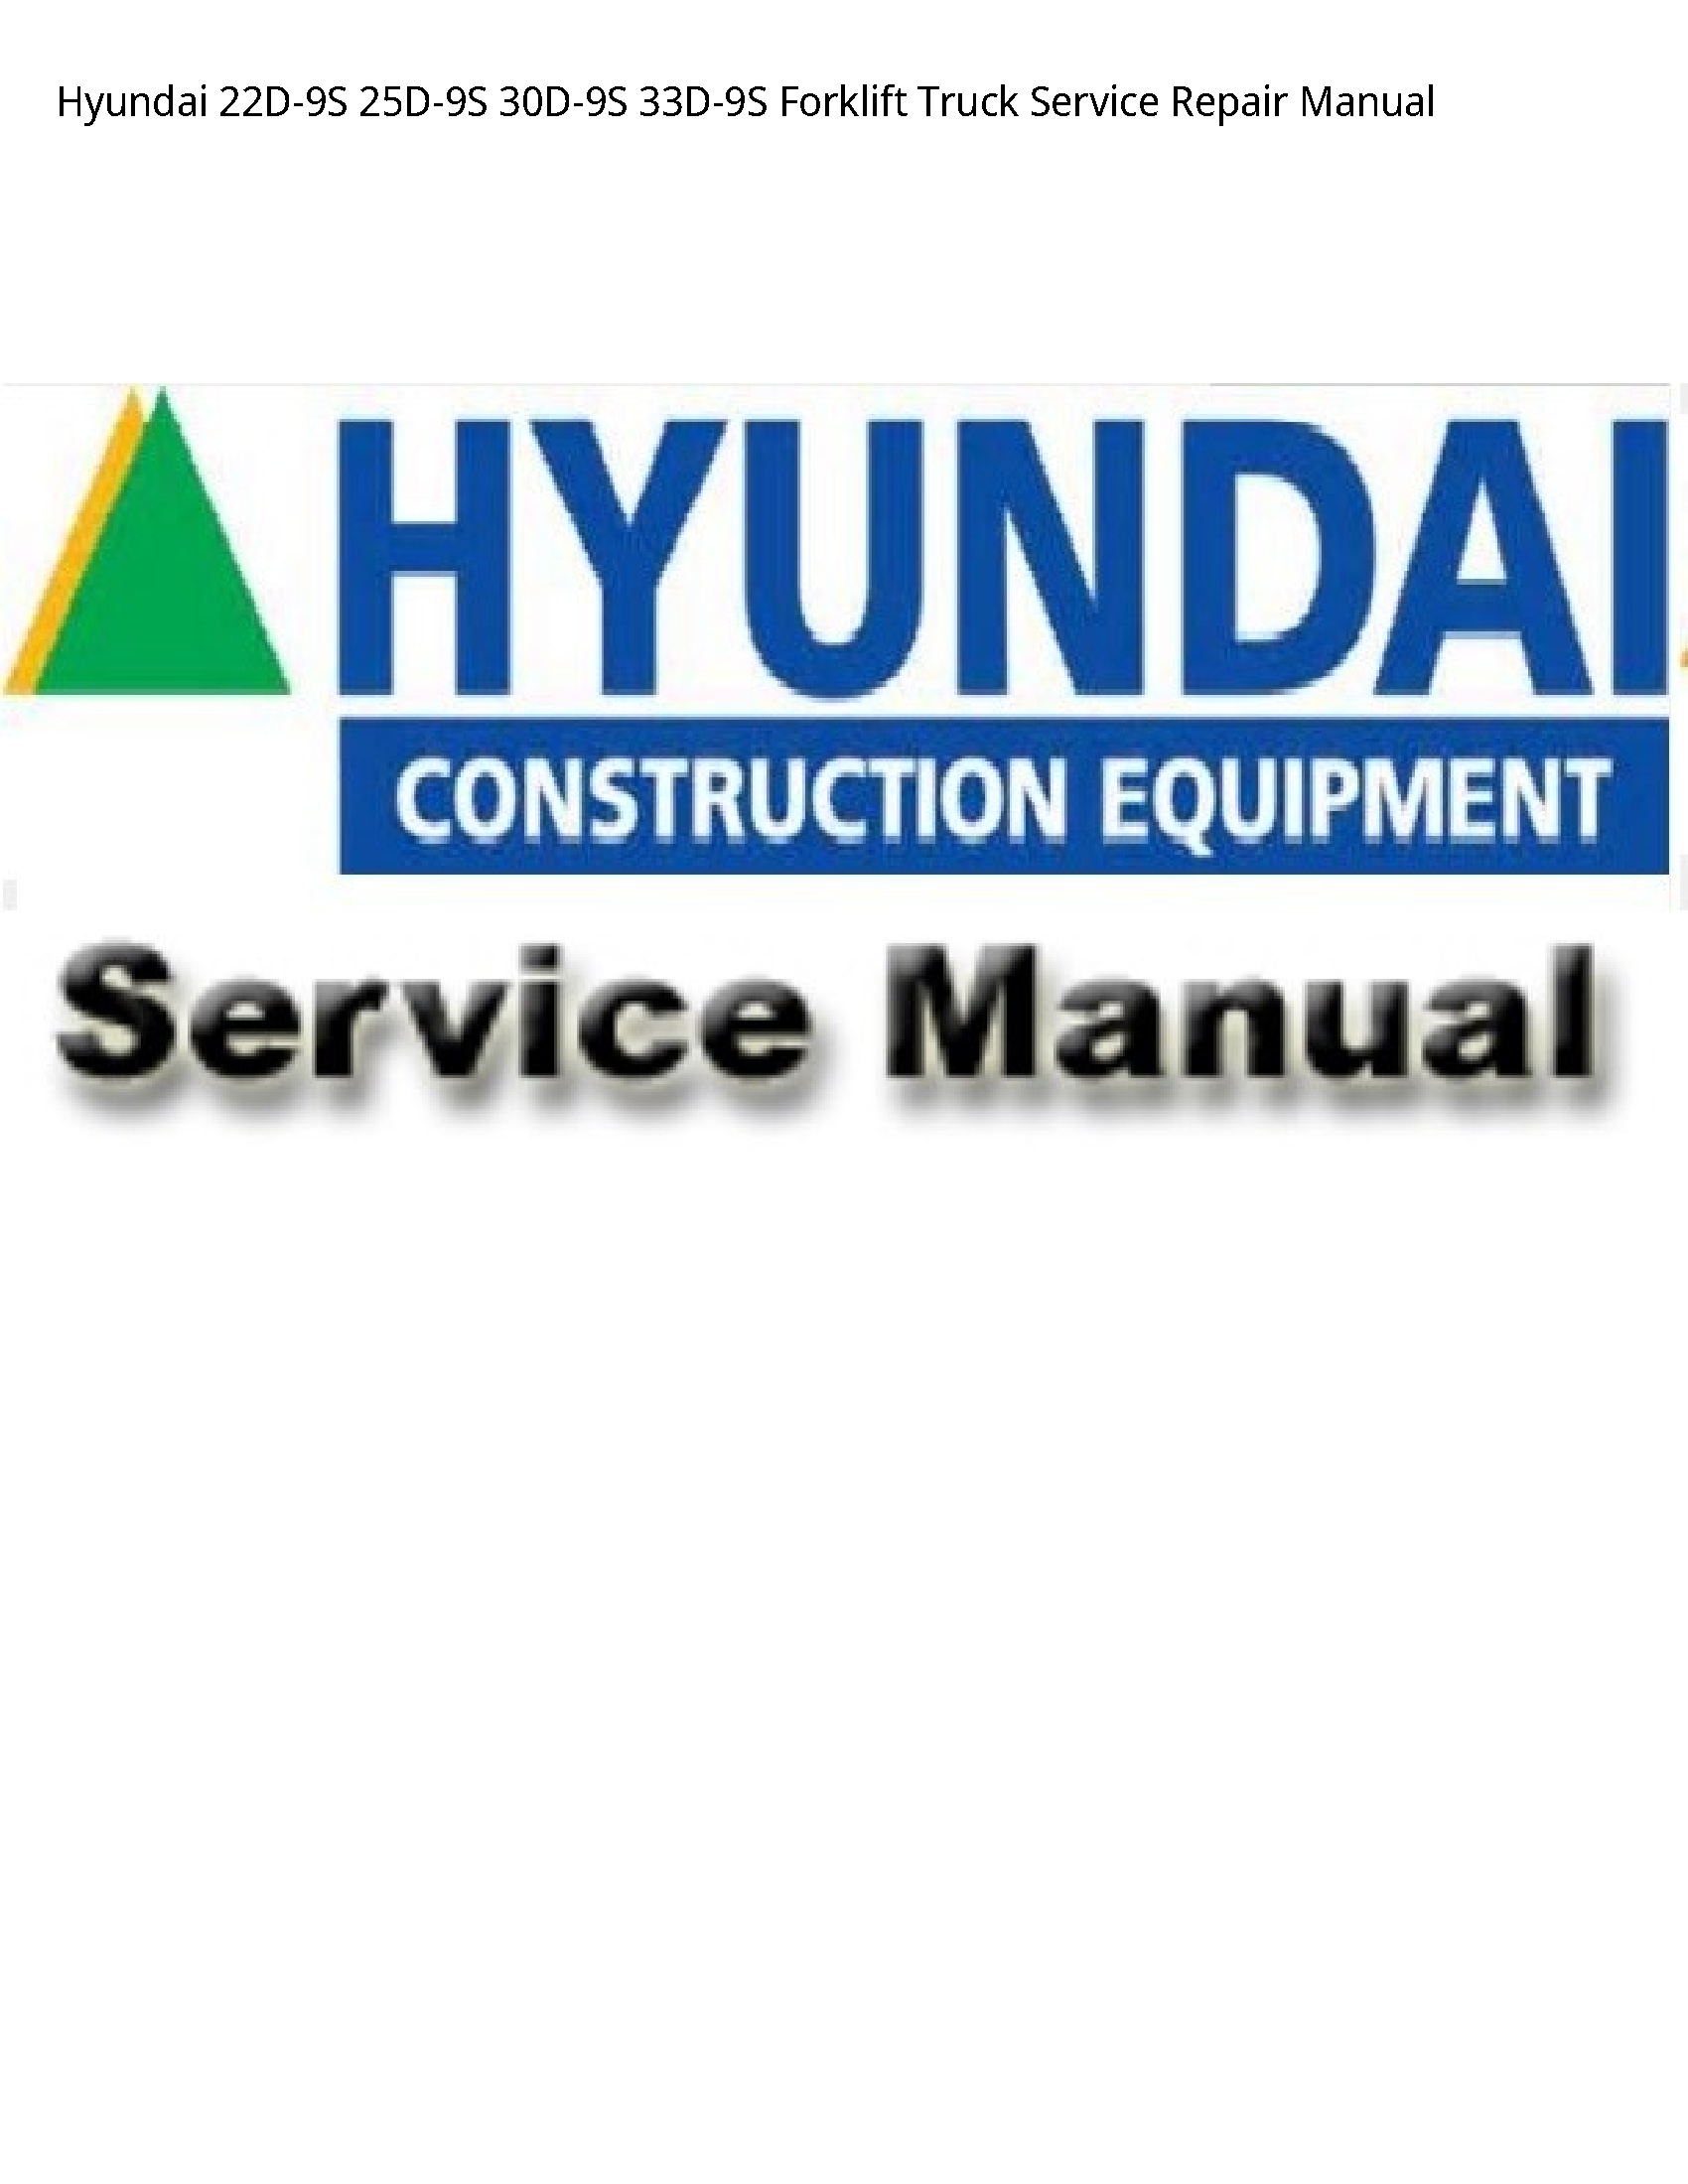 Hyundai 22D-9S Forklift Truck manual